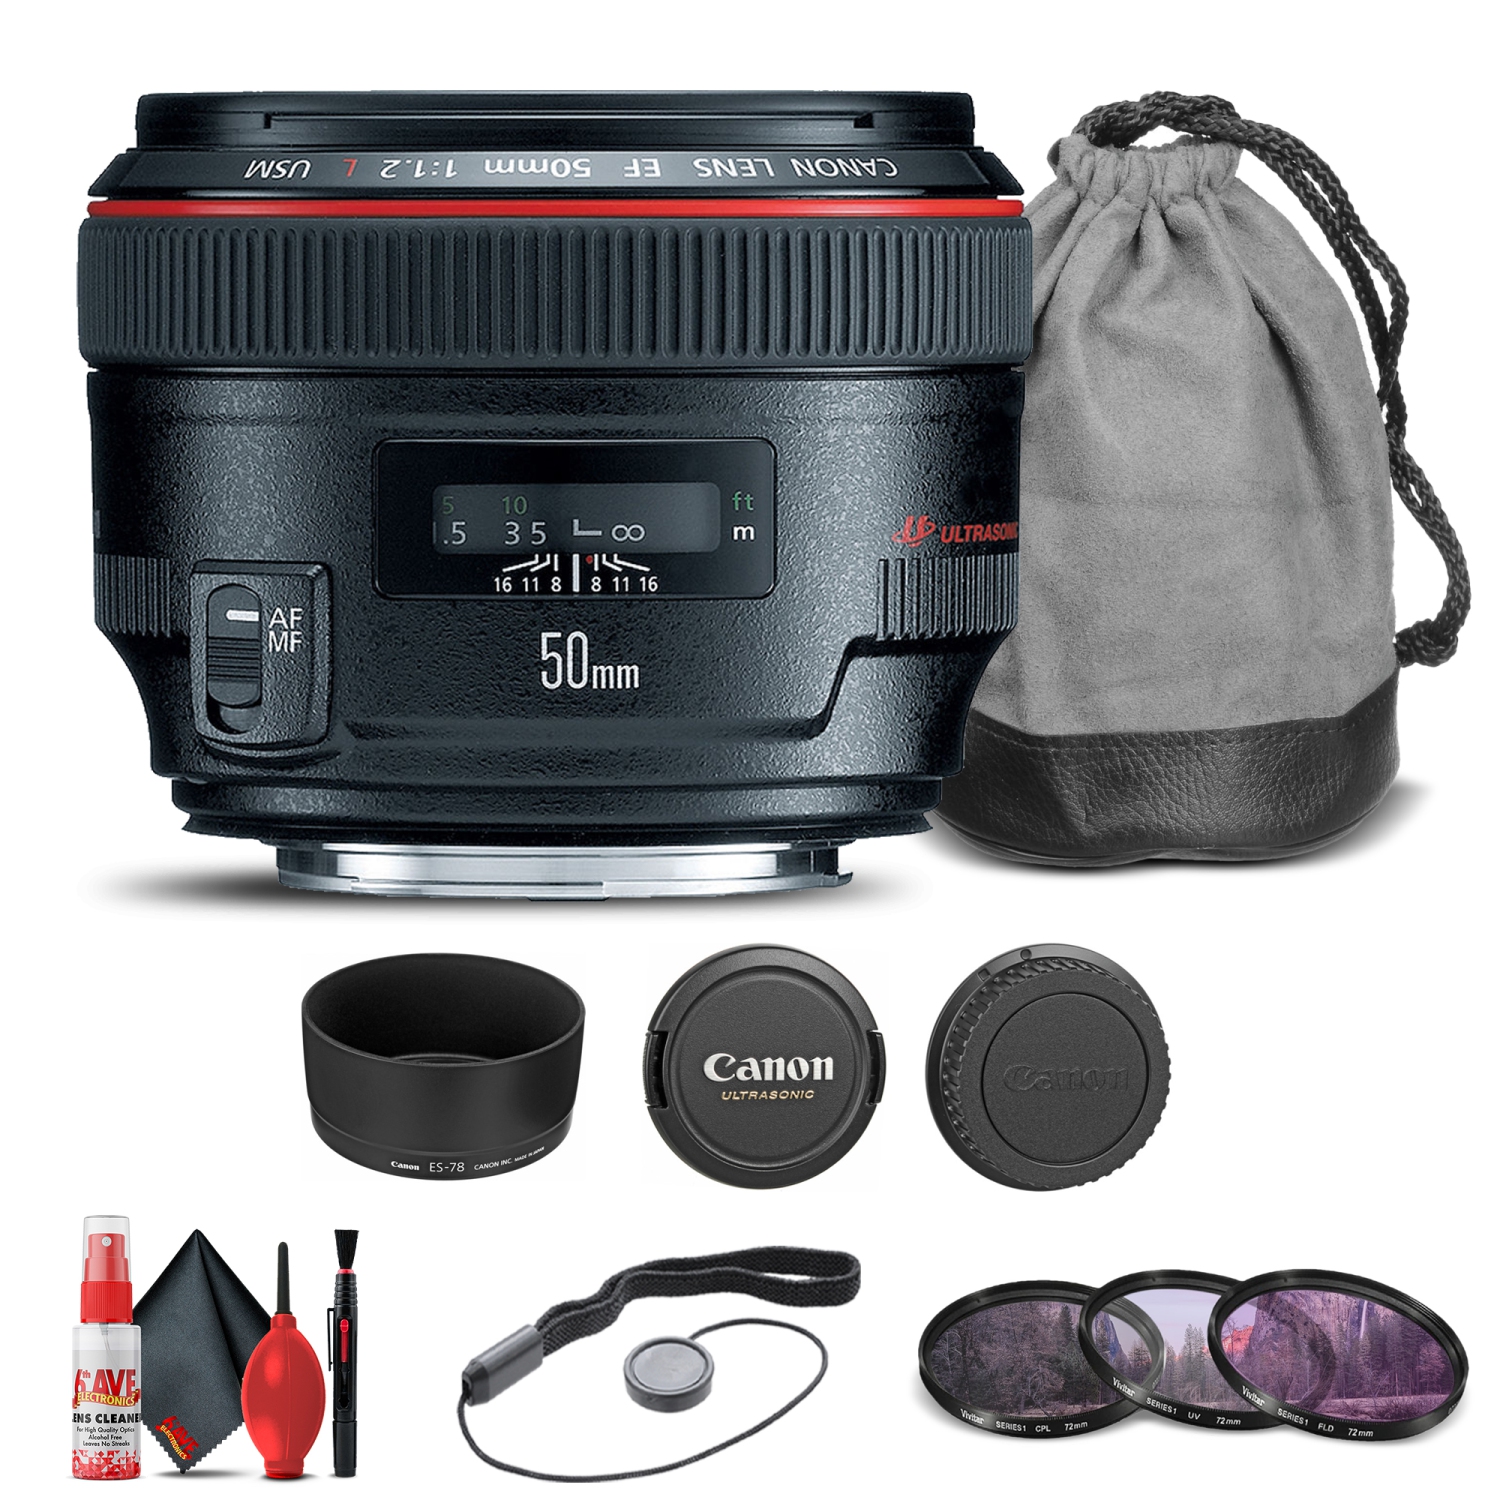 Canon EF 50mm f/1.2L USM Lens (1257B002) + Filter Kit + Cap Keeper 